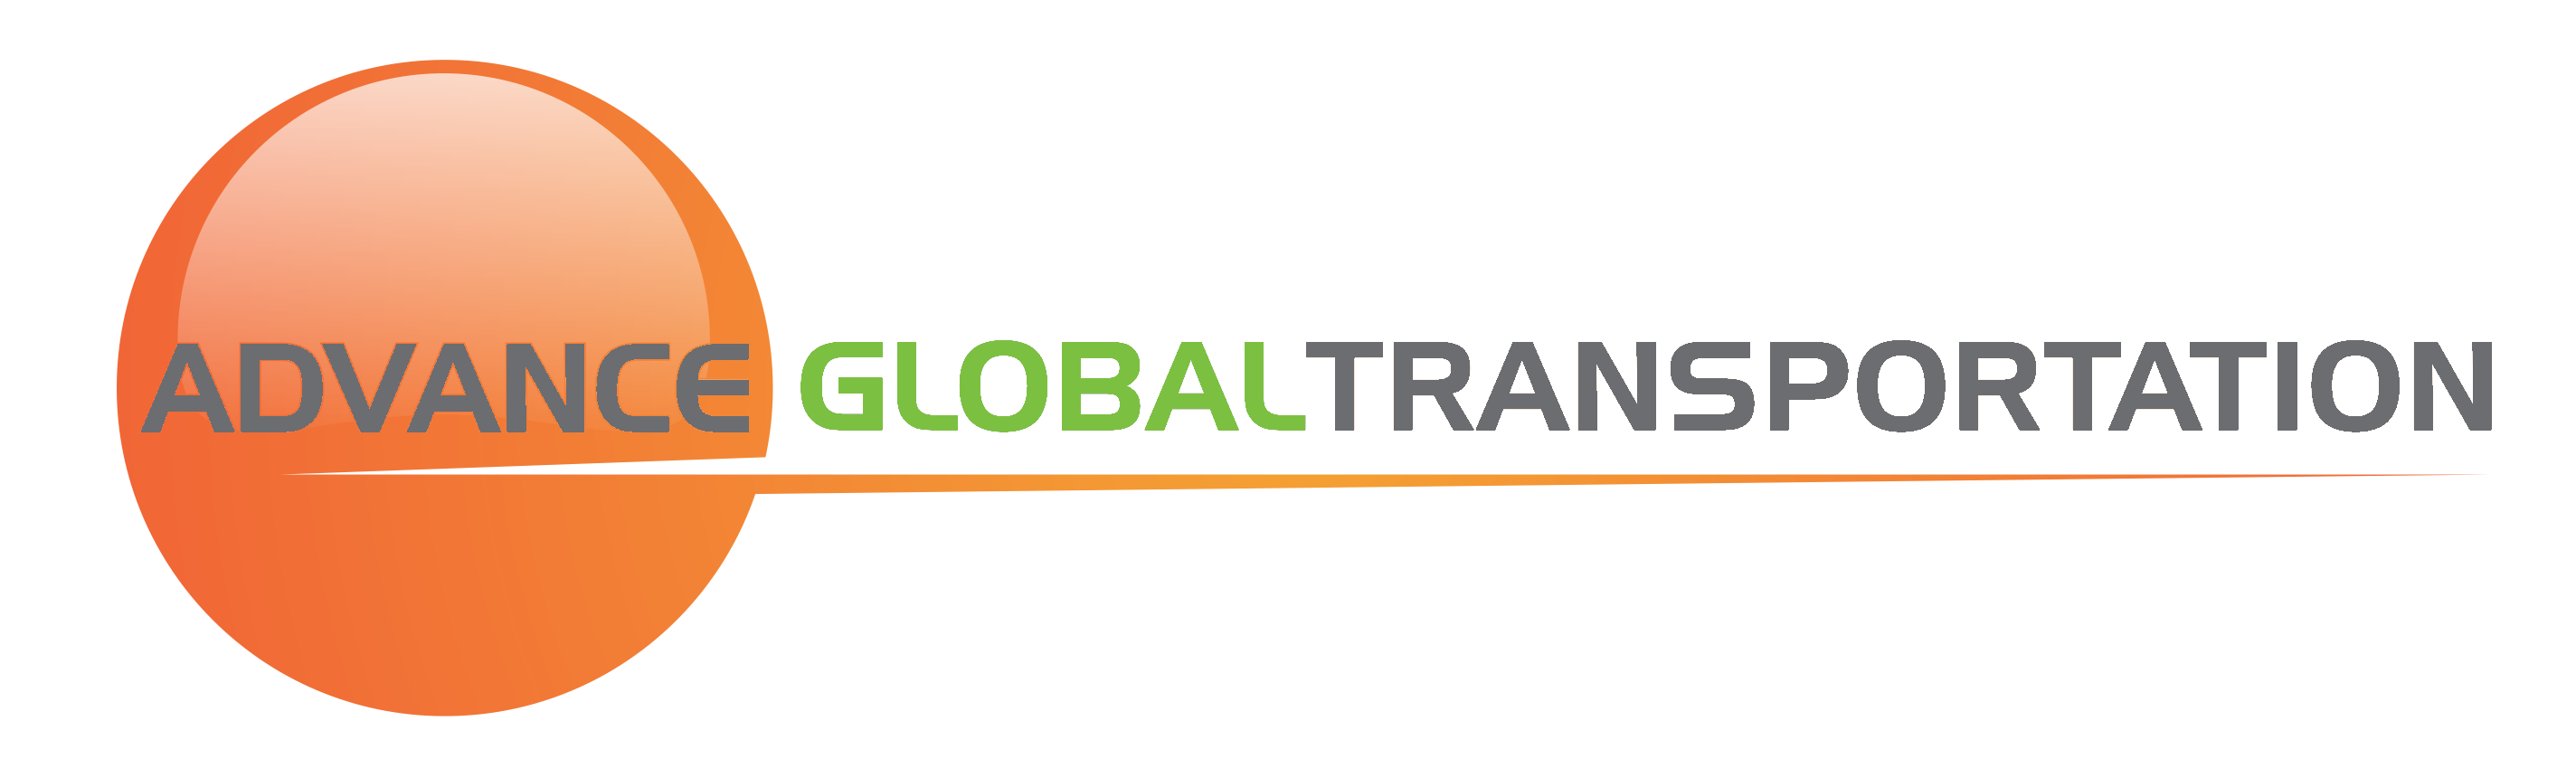 Advance Global Transportation